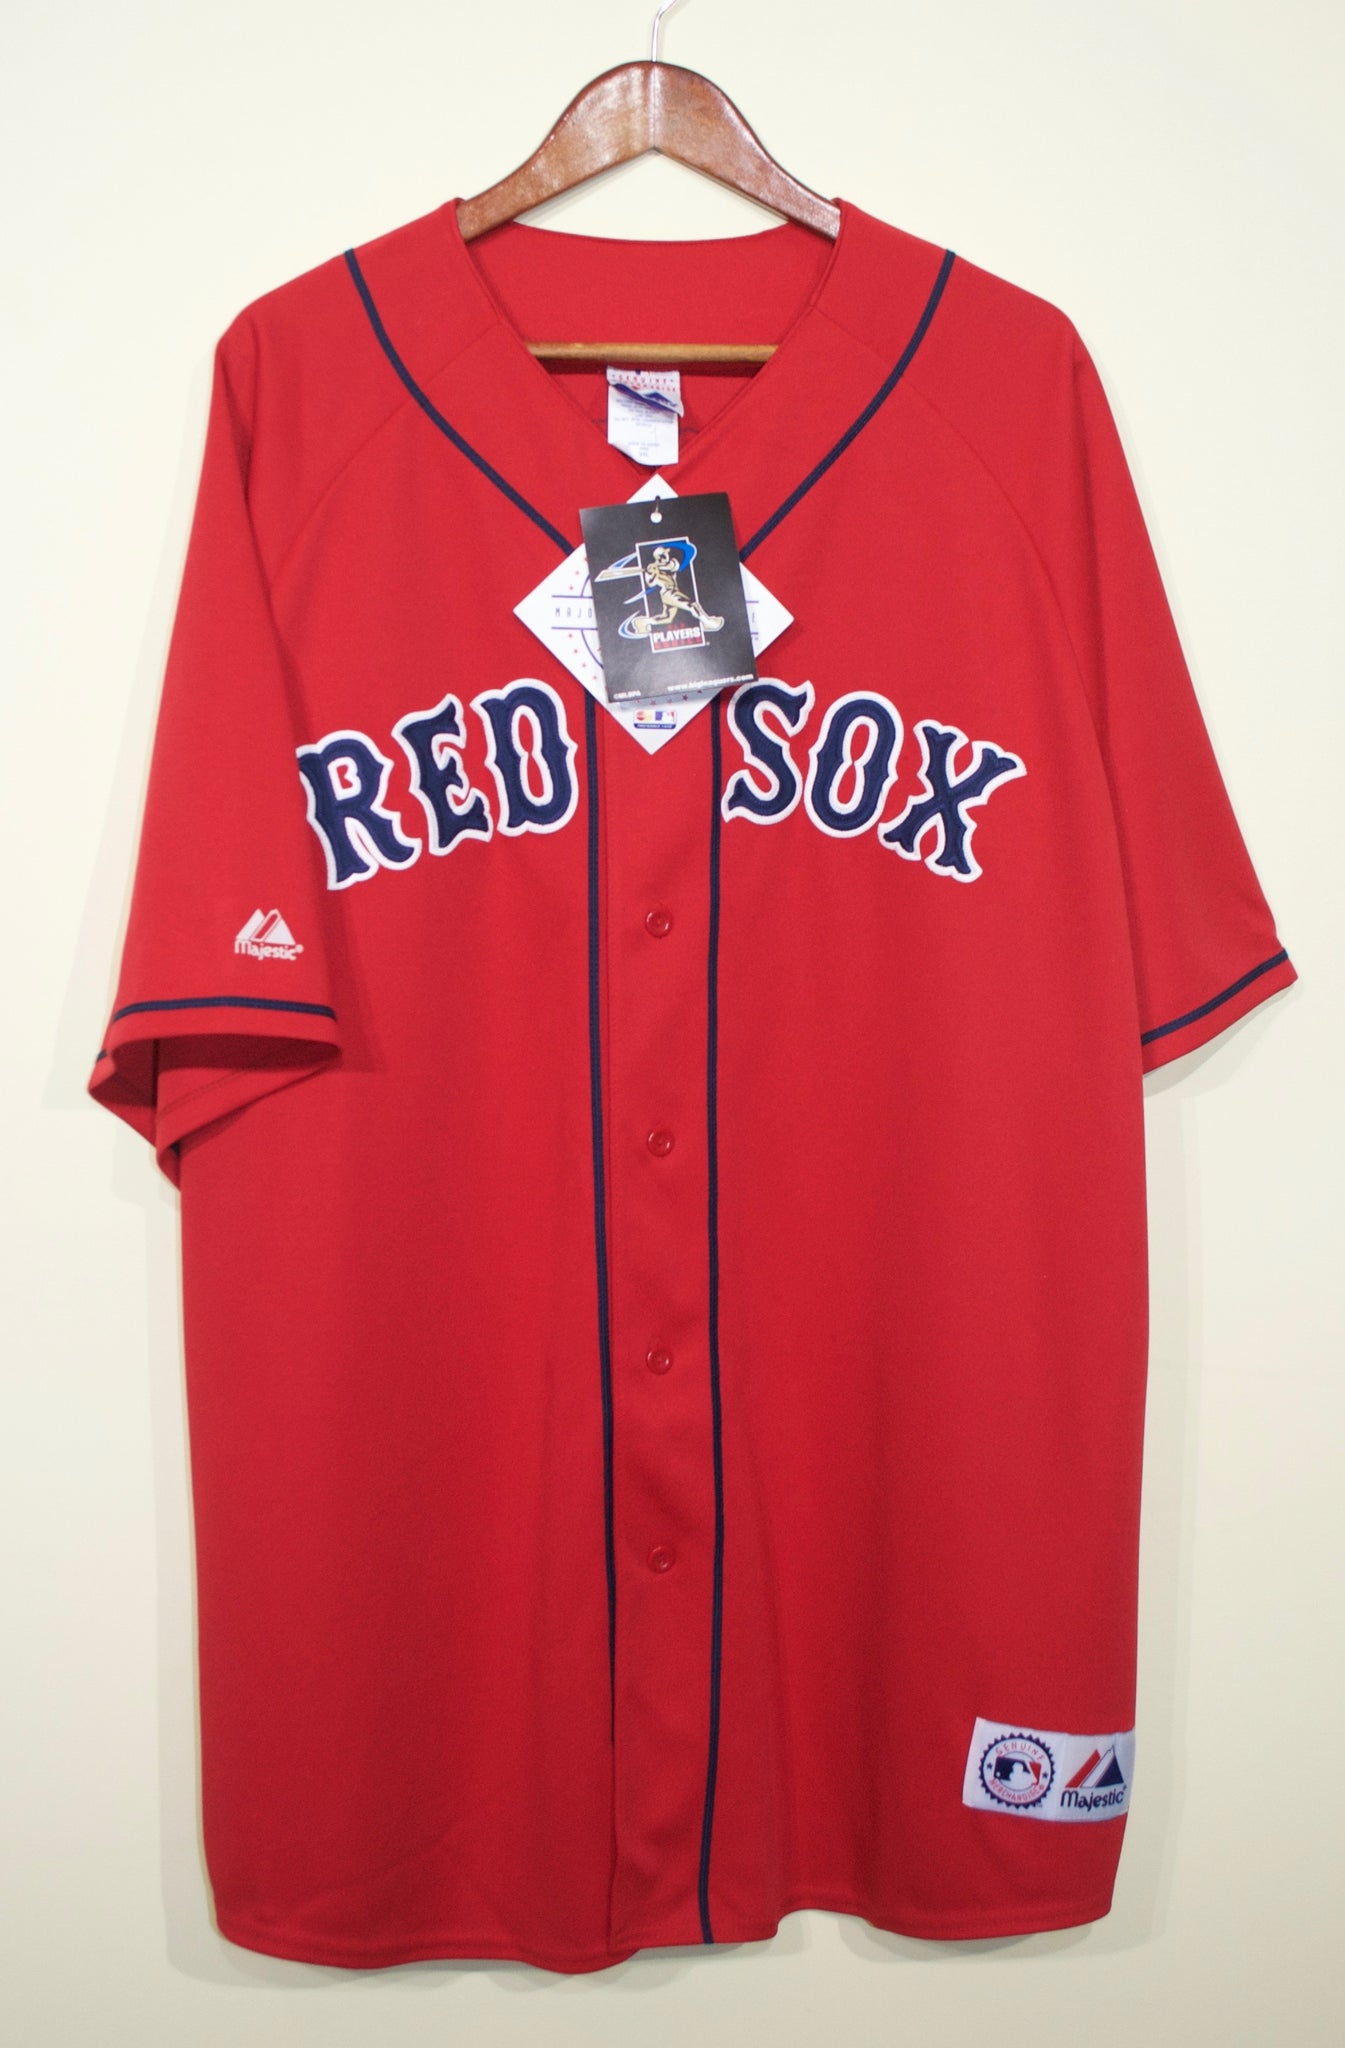 BOSTON RED SOX DAVID ORTIZ MAJESTIC AUTHENTIC MLB BASEBALL JERSEY